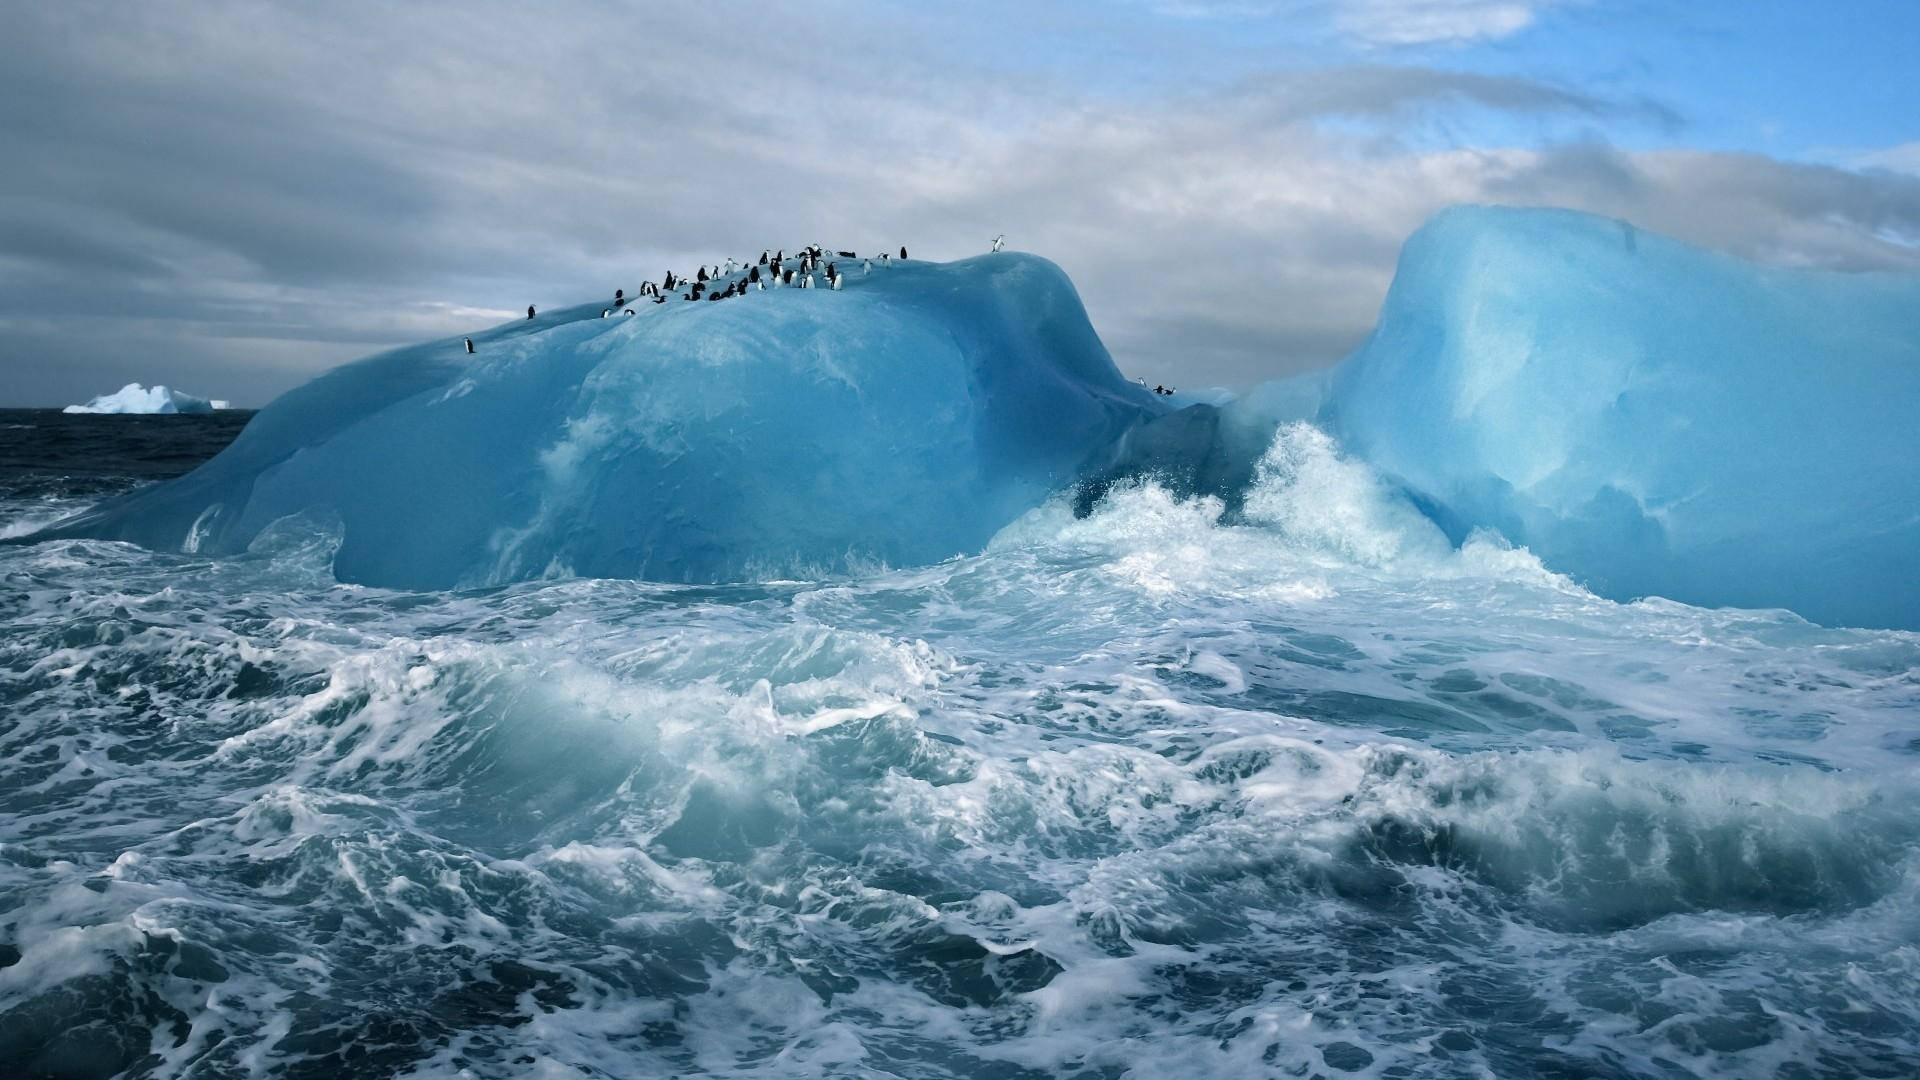 Arktischereisberg Mit Pinguinen Wallpaper